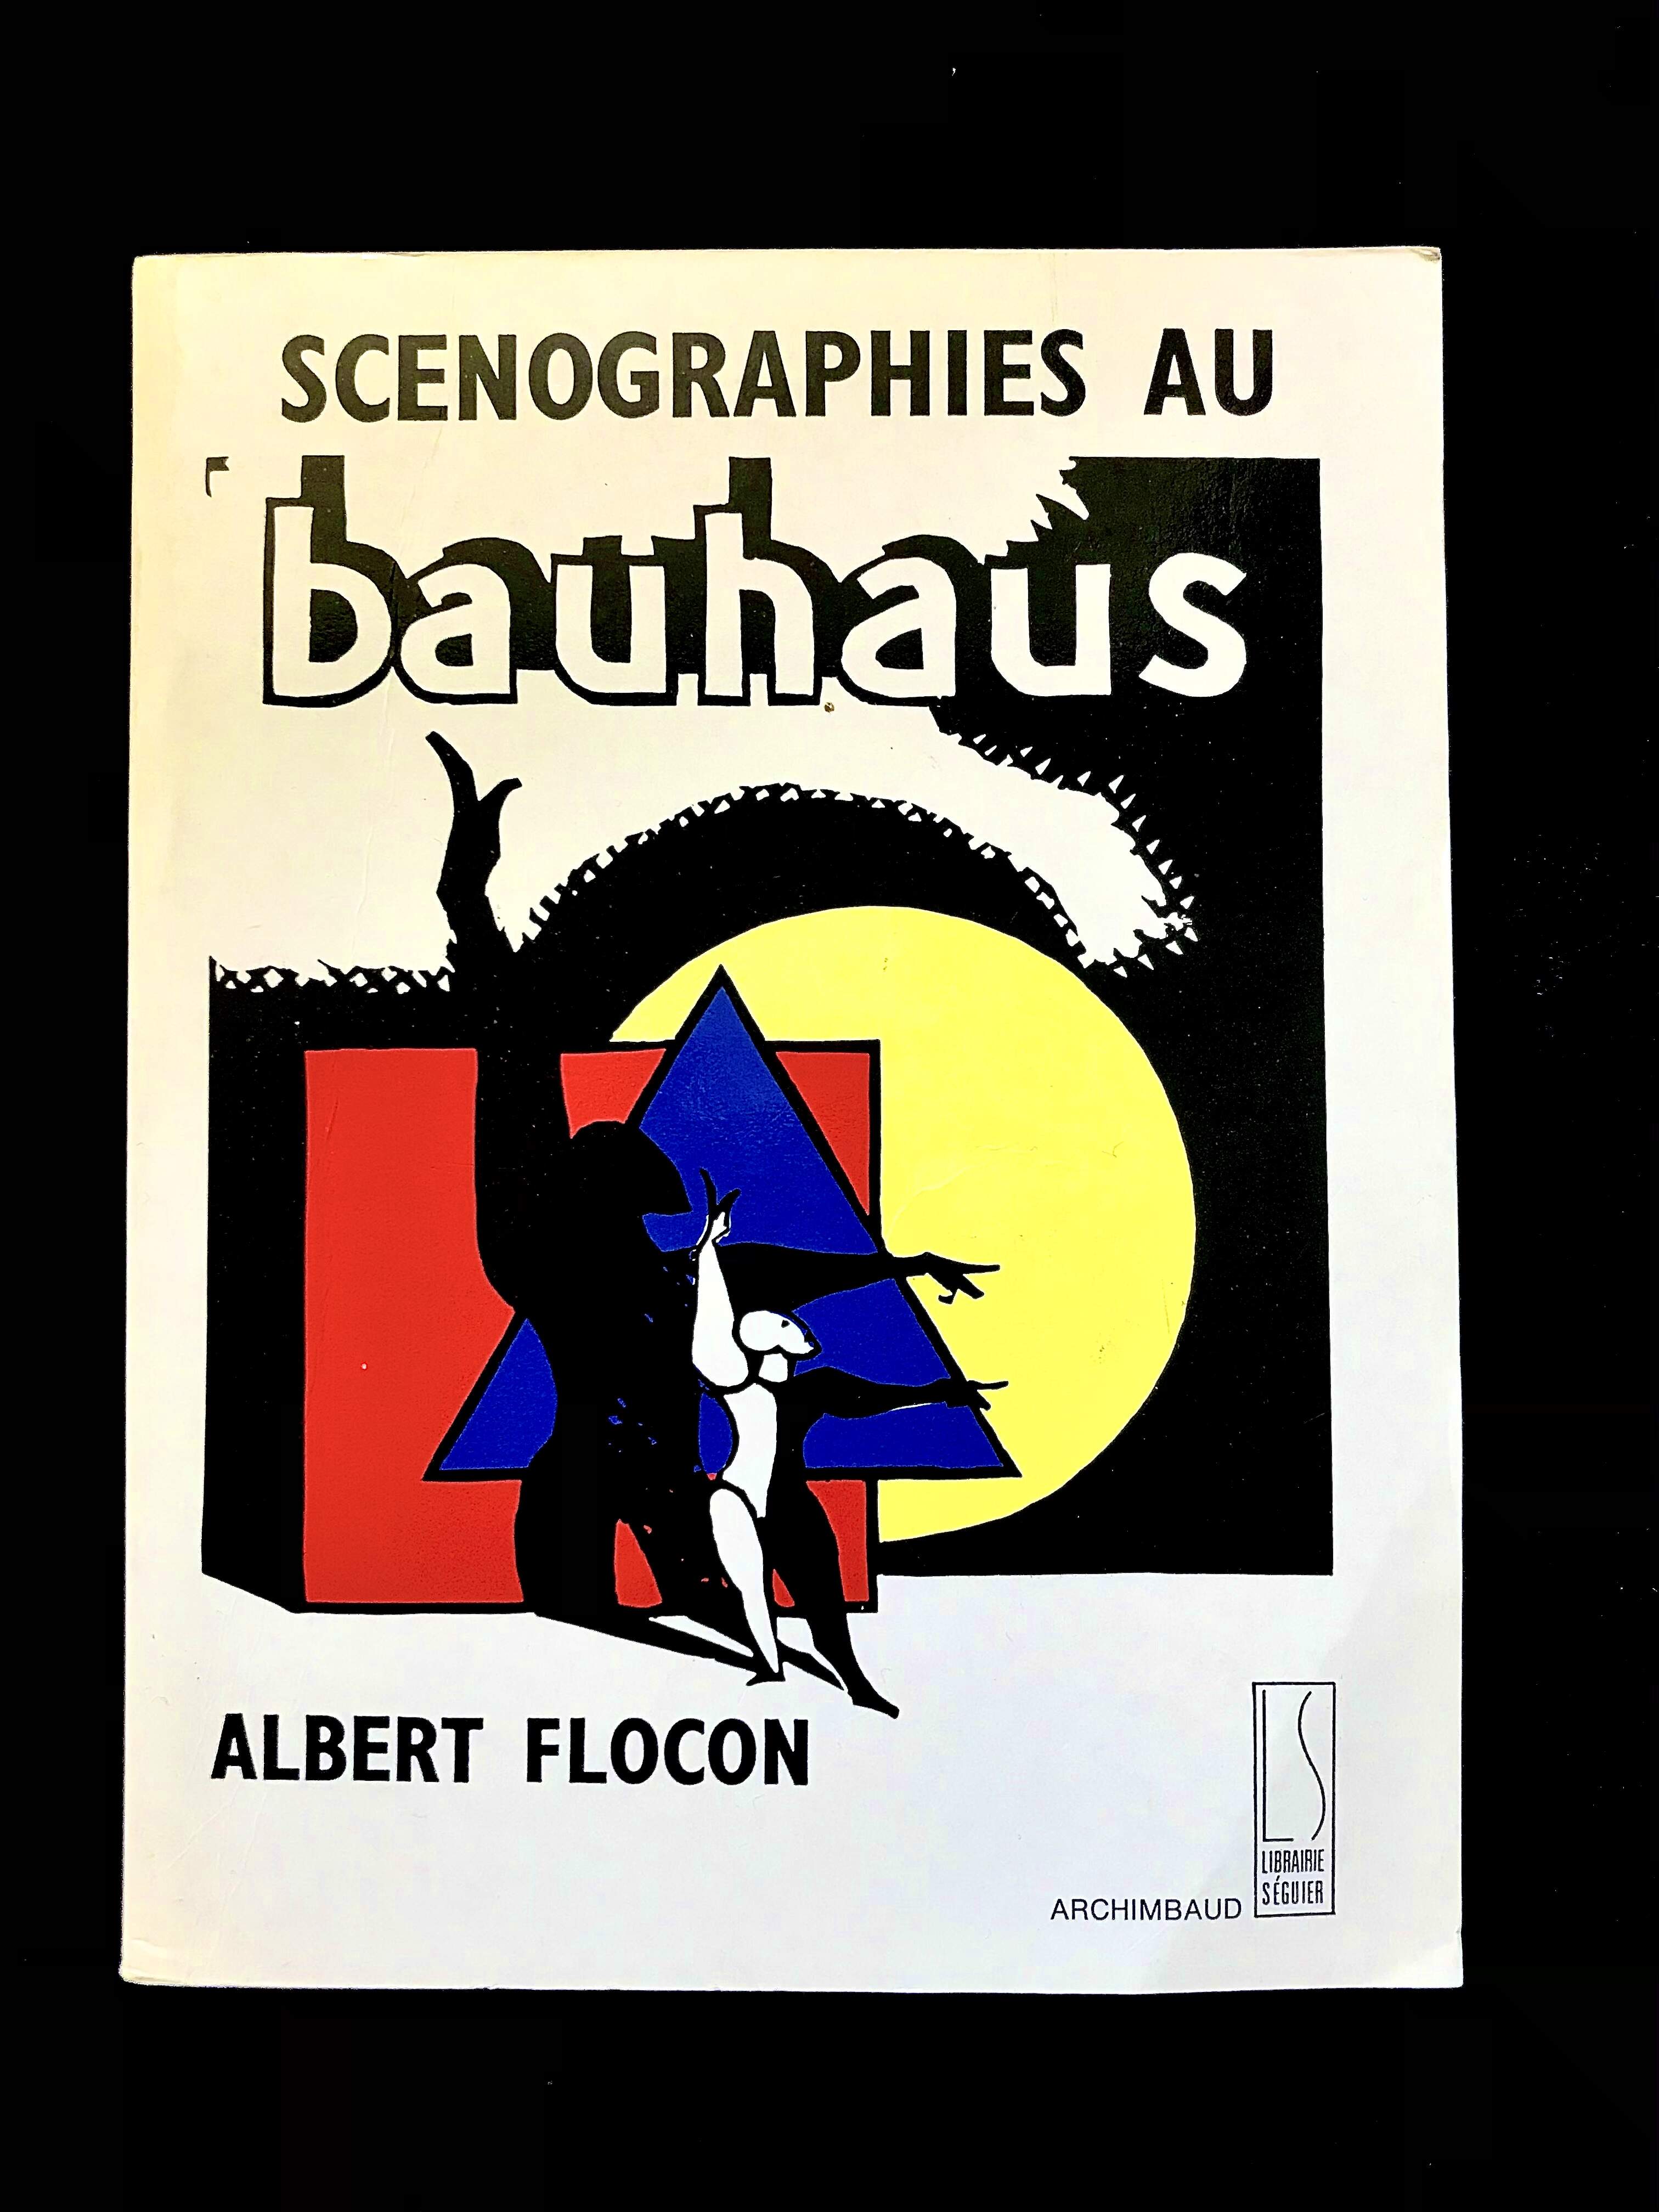 Scenographies au Bauhaus, Dessau 1927-1930 by Albert Flocon